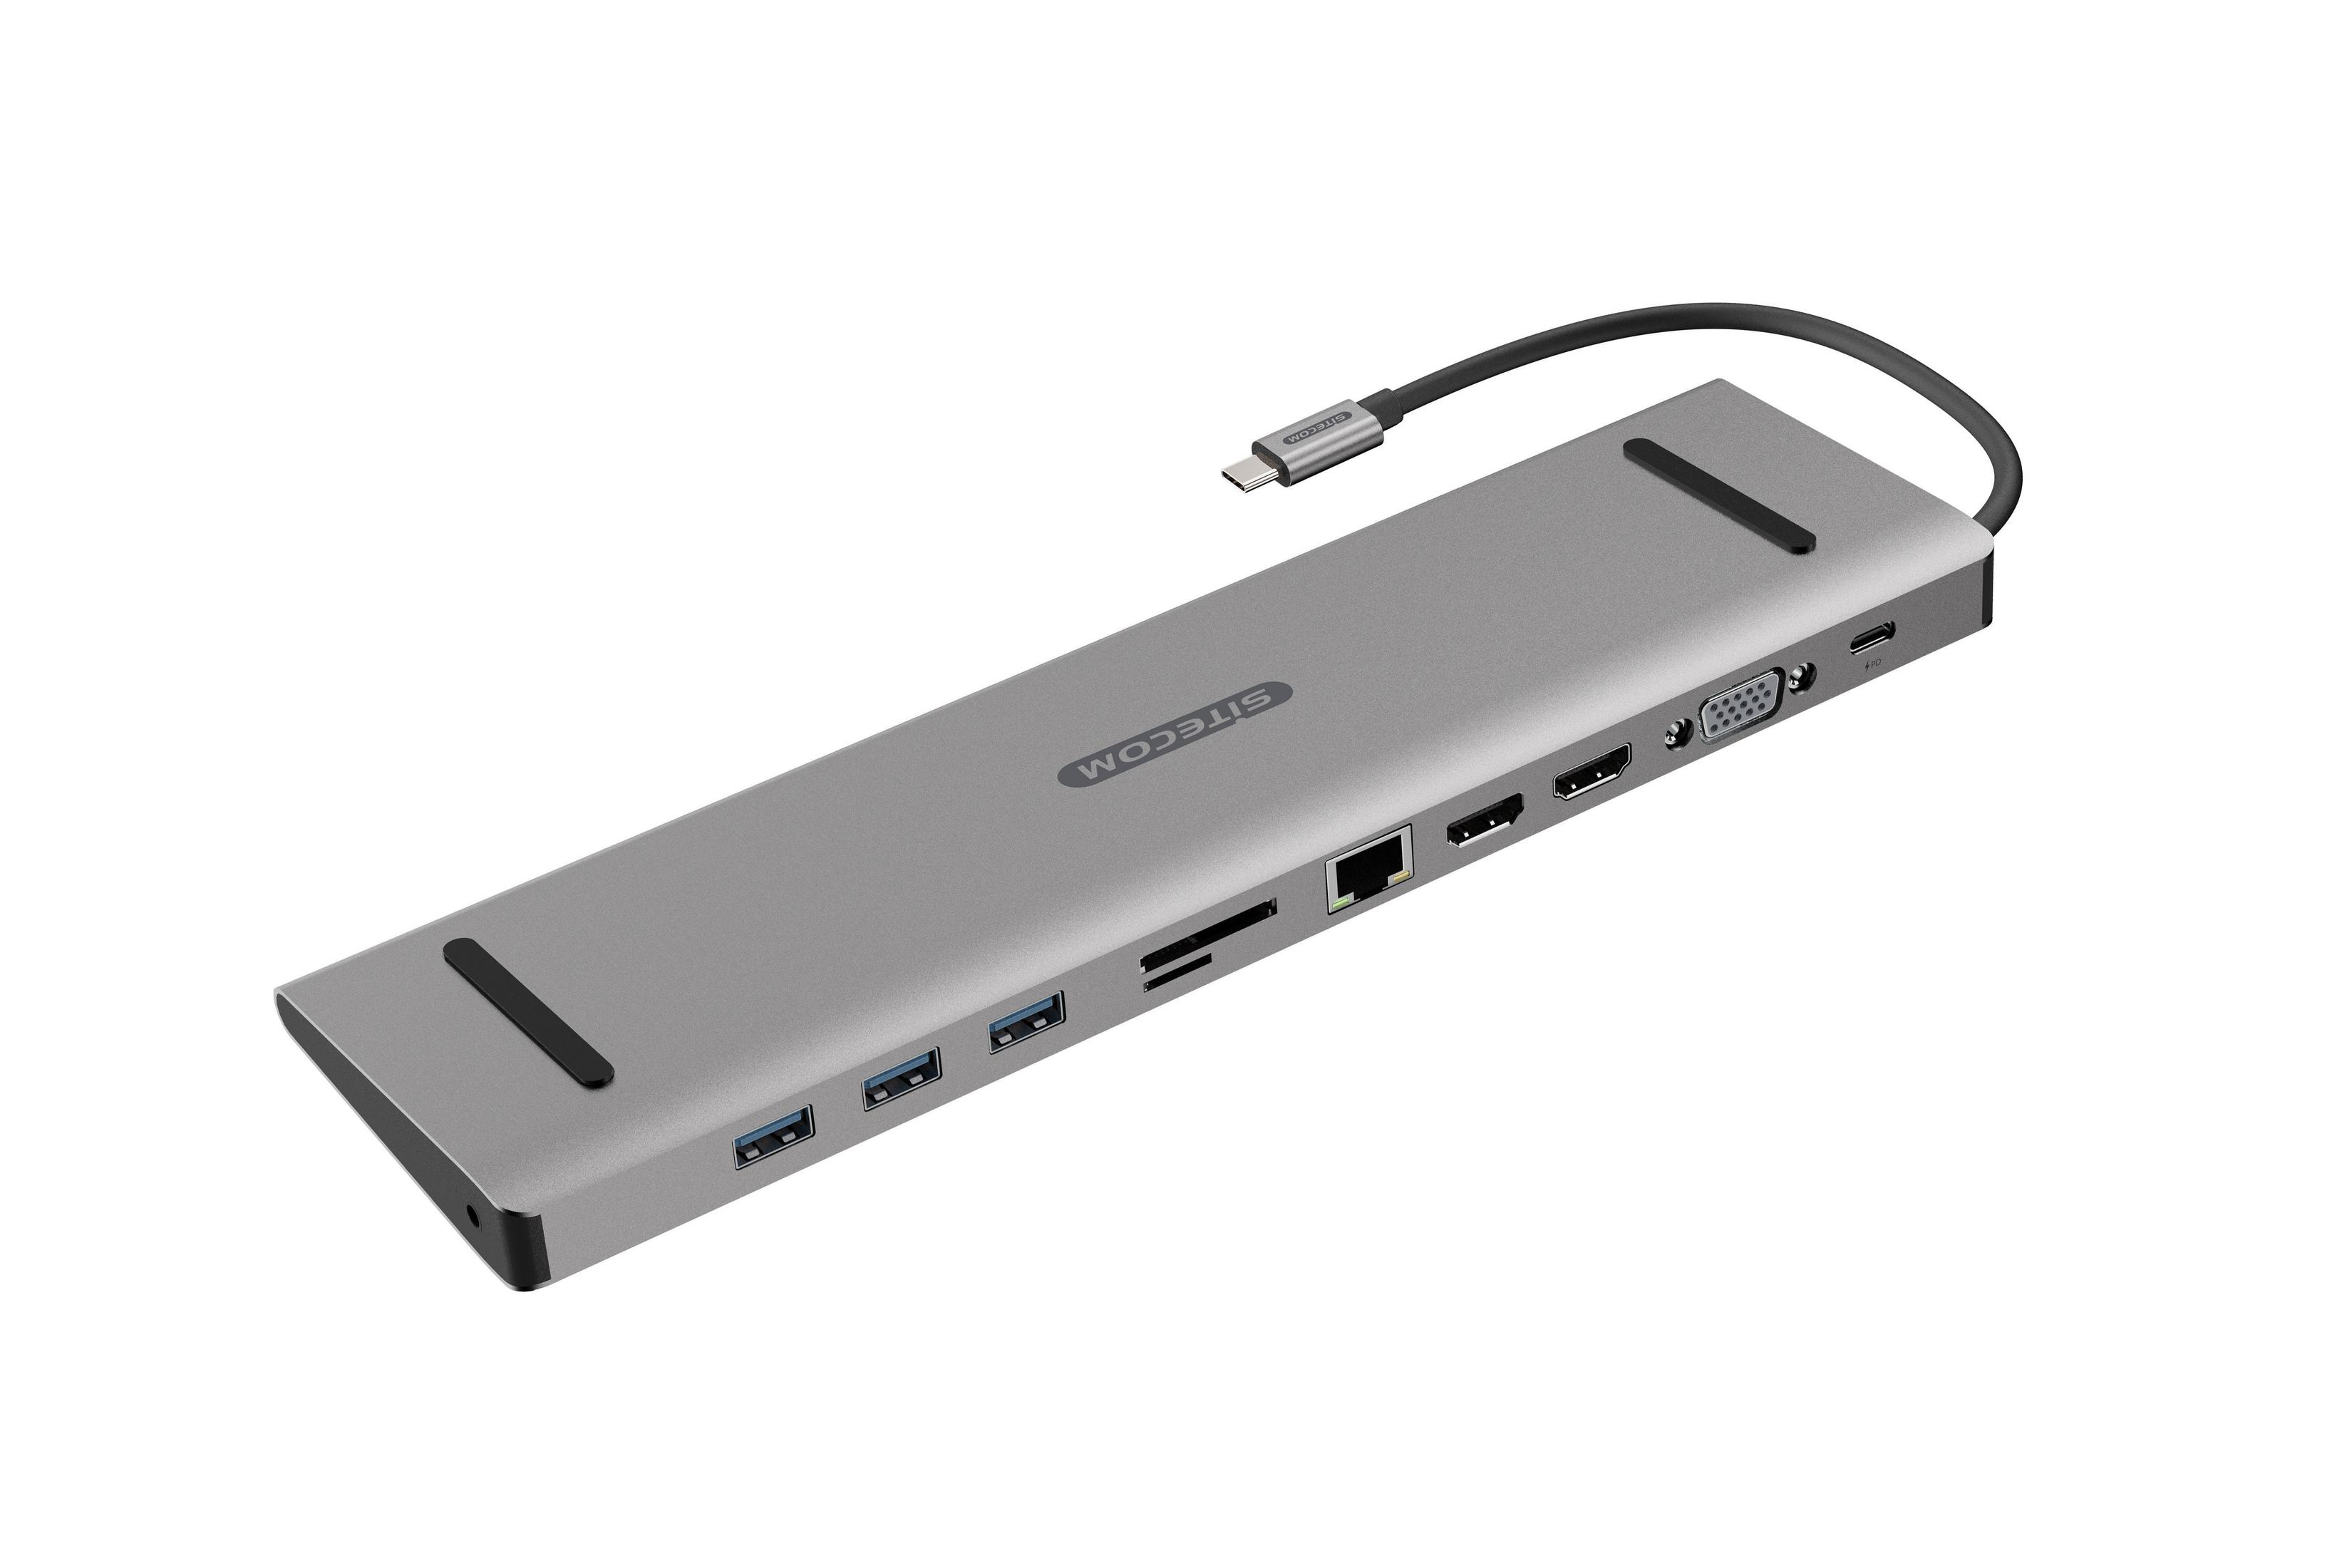 CN-389 USB-C Multiport, MULTIPRODOCK100WPD Silber 3.1 SITECOM USB